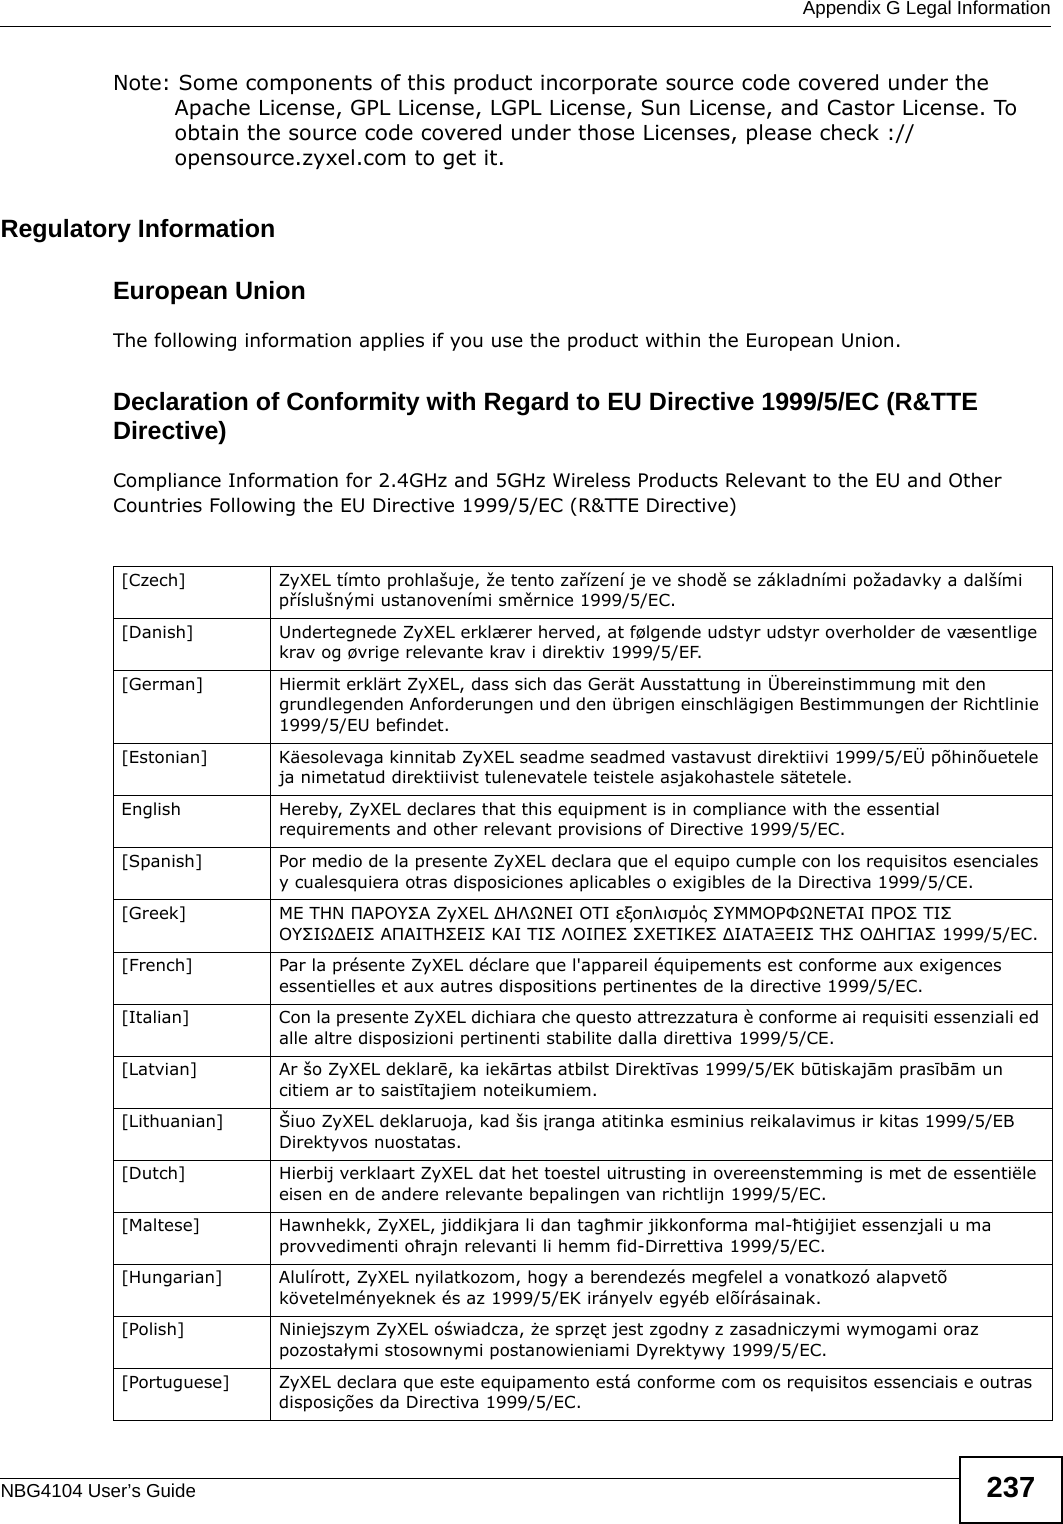  Appendix G Legal InformationNBG4104 User’s Guide 237Note: Some components of this product incorporate source code covered under the Apache License, GPL License, LGPL License, Sun License, and Castor License. To obtain the source code covered under those Licenses, please check ://opensource.zyxel.com to get it.Regulatory InformationEuropean UnionThe following information applies if you use the product within the European Union. Declaration of Conformity with Regard to EU Directive 1999/5/EC (R&amp;TTE Directive)Compliance Information for 2.4GHz and 5GHz Wireless Products Relevant to the EU and Other Countries Following the EU Directive 1999/5/EC (R&amp;TTE Directive) [Czech] ZyXEL tímto prohlašuje, že tento zařízení je ve shodě se základními požadavky a dalšími příslušnými ustanoveními směrnice 1999/5/EC.[Danish] Undertegnede ZyXEL erklærer herved, at følgende udstyr udstyr overholder de væsentlige krav og øvrige relevante krav i direktiv 1999/5/EF.[German] Hiermit erklärt ZyXEL, dass sich das Gerät Ausstattung in Übereinstimmung mit den grundlegenden Anforderungen und den übrigen einschlägigen Bestimmungen der Richtlinie 1999/5/EU befindet.[Estonian] Käesolevaga kinnitab ZyXEL seadme seadmed vastavust direktiivi 1999/5/EÜ põhinõuetele ja nimetatud direktiivist tulenevatele teistele asjakohastele sätetele.English Hereby, ZyXEL declares that this equipment is in compliance with the essential requirements and other relevant provisions of Directive 1999/5/EC.[Spanish] Por medio de la presente ZyXEL declara que el equipo cumple con los requisitos esenciales y cualesquiera otras disposiciones aplicables o exigibles de la Directiva 1999/5/CE.[Greek] ΜΕ ΤΗΝ ΠΑΡΟΥΣΑ ZyXEL ΔΗΛΩΝΕΙ ΟΤΙ εξοπλισμός ΣΥΜΜΟΡΦΩΝΕΤΑΙ ΠΡΟΣ ΤΙΣ ΟΥΣΙΩΔΕΙΣ ΑΠΑΙΤΗΣΕΙΣ ΚΑΙ ΤΙΣ ΛΟΙΠΕΣ ΣΧΕΤΙΚΕΣ ΔΙΑΤΑΞΕΙΣ ΤΗΣ ΟΔΗΓΙΑΣ 1999/5/ΕC.[French] Par la présente ZyXEL déclare que l&apos;appareil équipements est conforme aux exigences essentielles et aux autres dispositions pertinentes de la directive 1999/5/EC.[Italian] Con la presente ZyXEL dichiara che questo attrezzatura è conforme ai requisiti essenziali ed alle altre disposizioni pertinenti stabilite dalla direttiva 1999/5/CE.[Latvian] Ar šo ZyXEL deklarē, ka iekārtas atbilst Direktīvas 1999/5/EK būtiskajām prasībām un citiem ar to saistītajiem noteikumiem.[Lithuanian]  Šiuo ZyXEL deklaruoja, kad šis įranga atitinka esminius reikalavimus ir kitas 1999/5/EB Direktyvos nuostatas.[Dutch] Hierbij verklaart ZyXEL dat het toestel uitrusting in overeenstemming is met de essentiële eisen en de andere relevante bepalingen van richtlijn 1999/5/EC.[Maltese] Hawnhekk, ZyXEL, jiddikjara li dan tagħmir jikkonforma mal-ħtiġijiet essenzjali u ma provvedimenti oħrajn relevanti li hemm fid-Dirrettiva 1999/5/EC.[Hungarian] Alulírott, ZyXEL nyilatkozom, hogy a berendezés megfelel a vonatkozó alapvetõ követelményeknek és az 1999/5/EK irányelv egyéb elõírásainak.[Polish] Niniejszym ZyXEL oświadcza, że sprzęt jest zgodny z zasadniczymi wymogami oraz pozostałymi stosownymi postanowieniami Dyrektywy 1999/5/EC.[Portuguese] ZyXEL declara que este equipamento está conforme com os requisitos essenciais e outras disposições da Directiva 1999/5/EC.